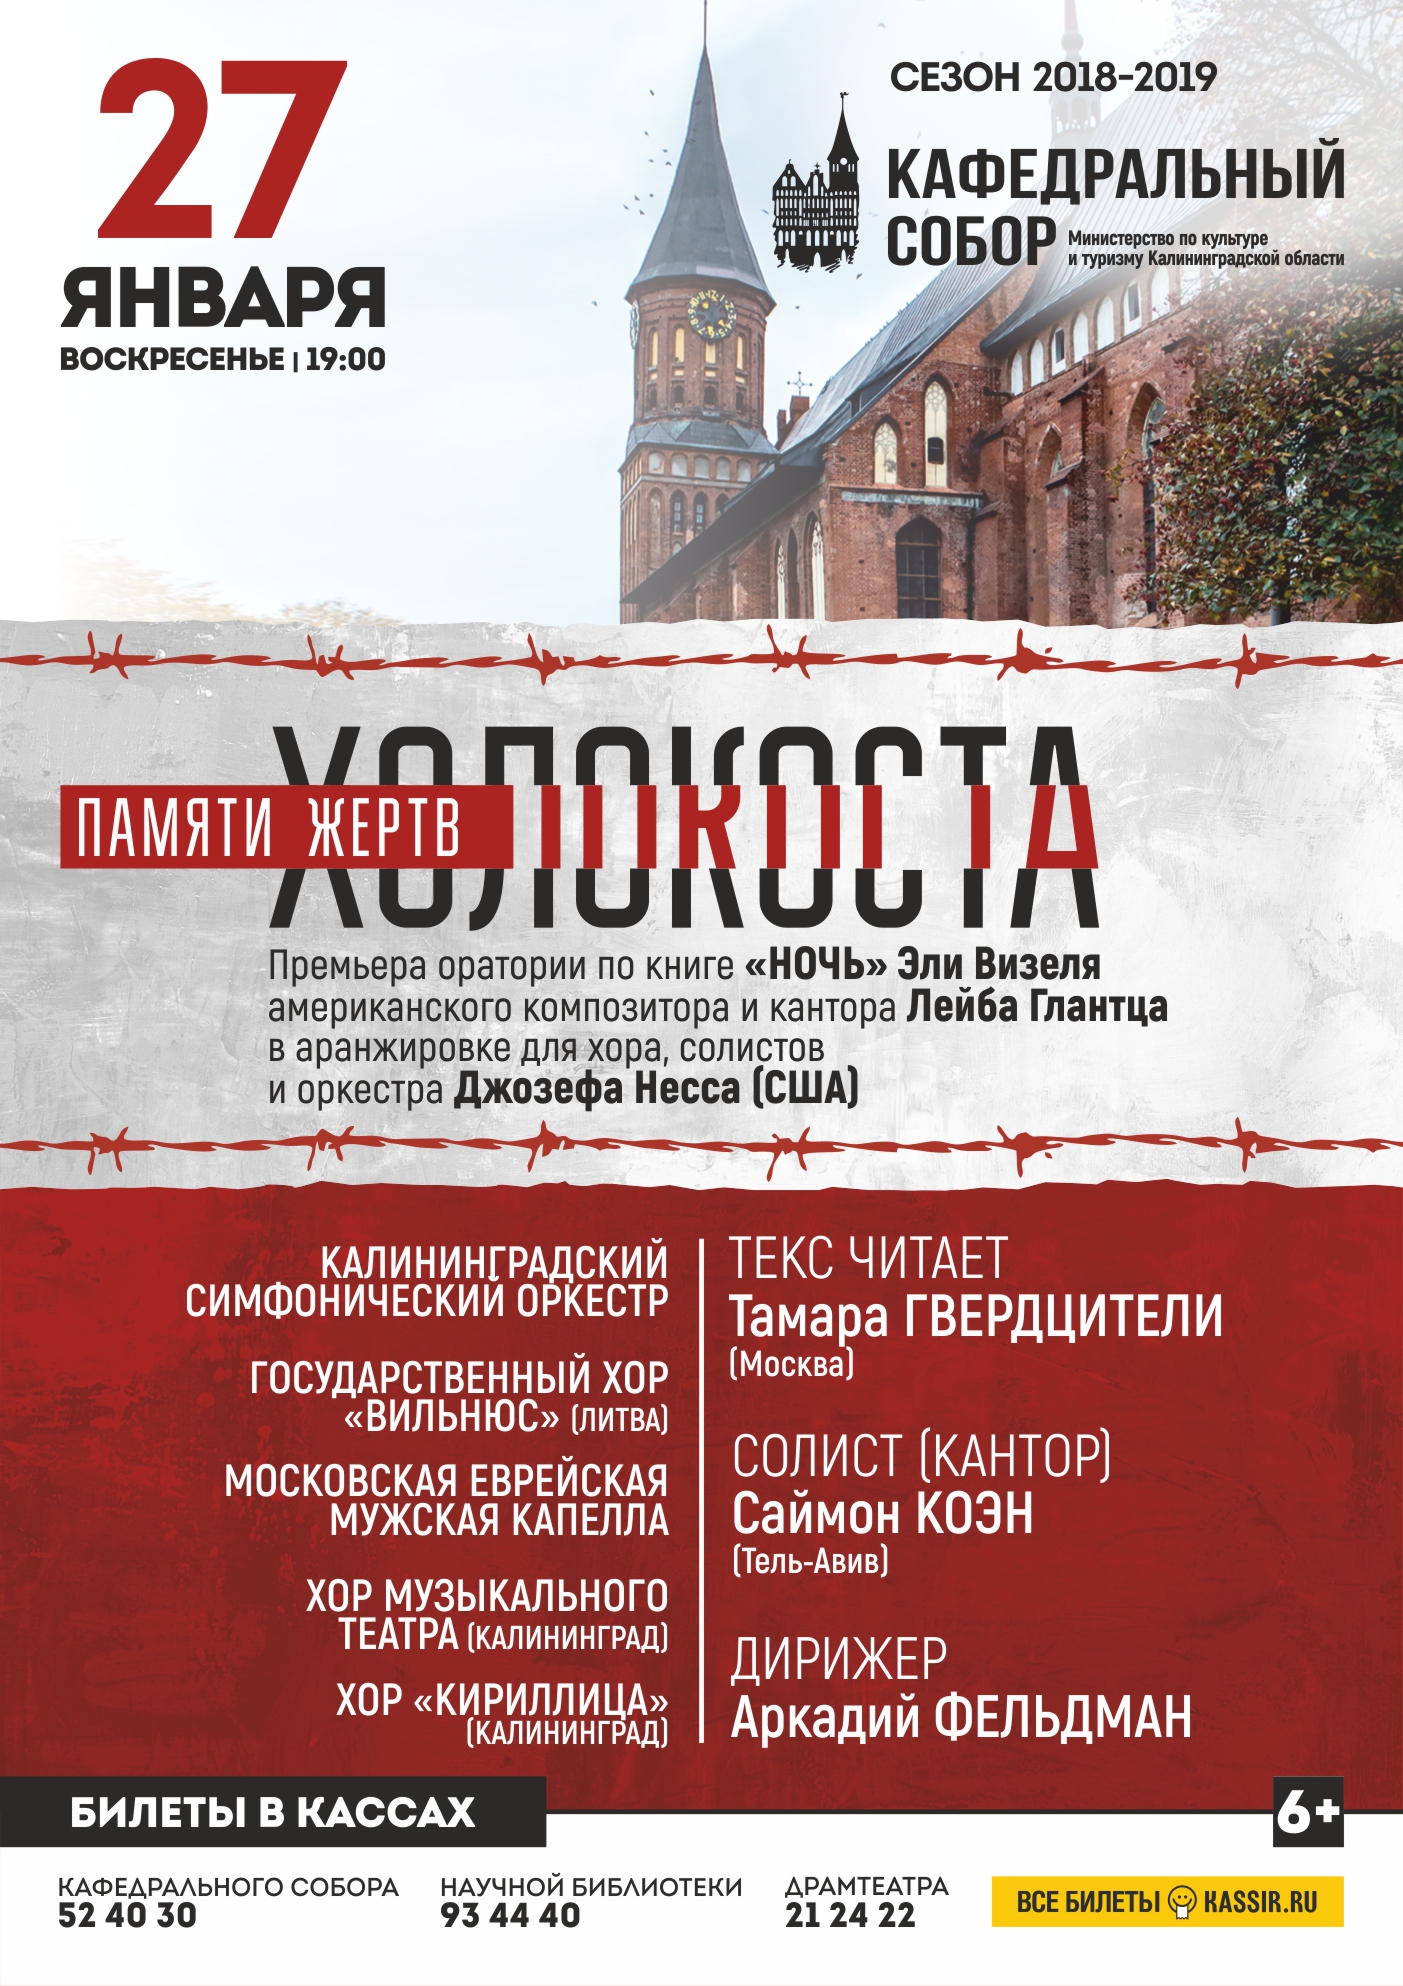 Концерт: Памяти жертв холокоста